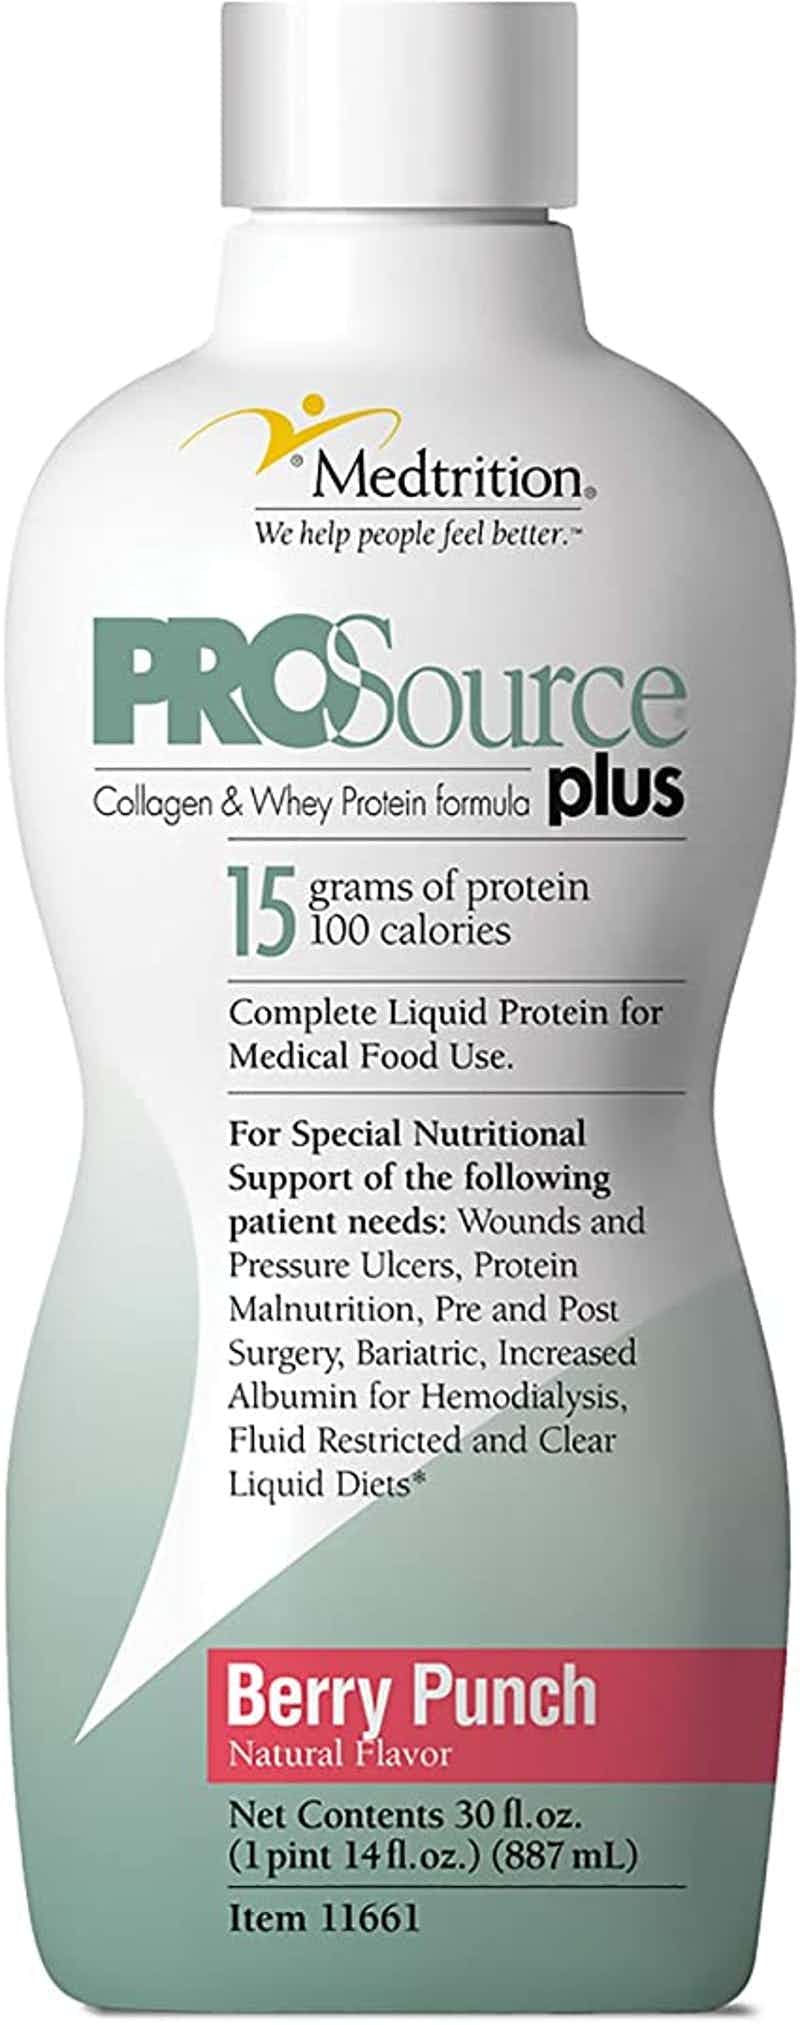 ProSource Plus Collagen & Whey Protein Formula, 30 oz.